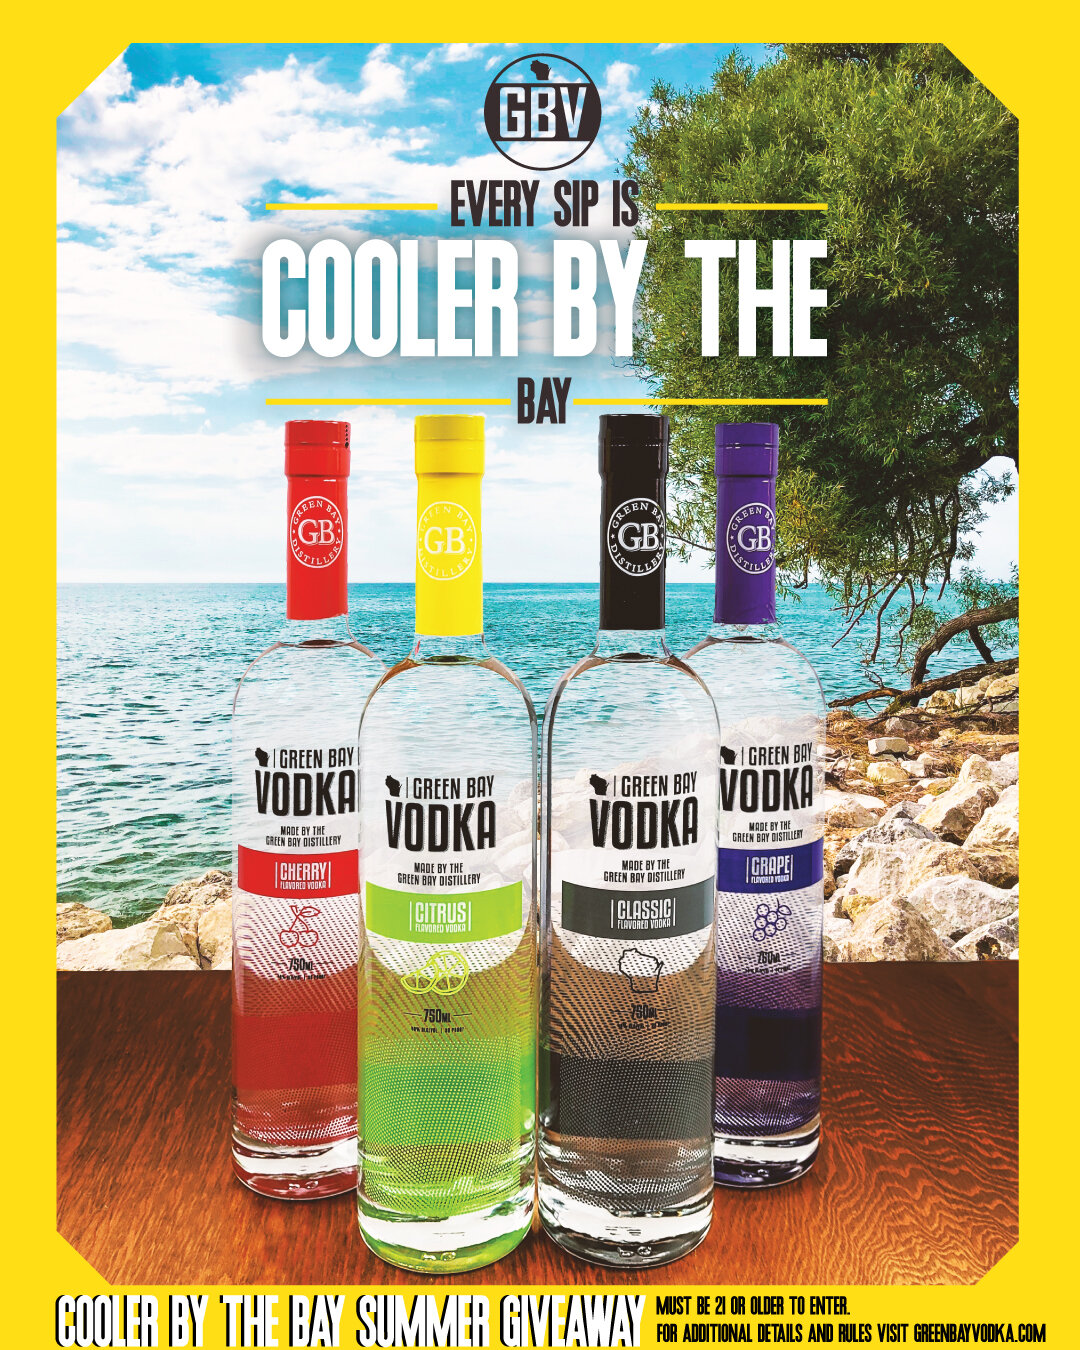 The Bay Vodka 2016 CDR